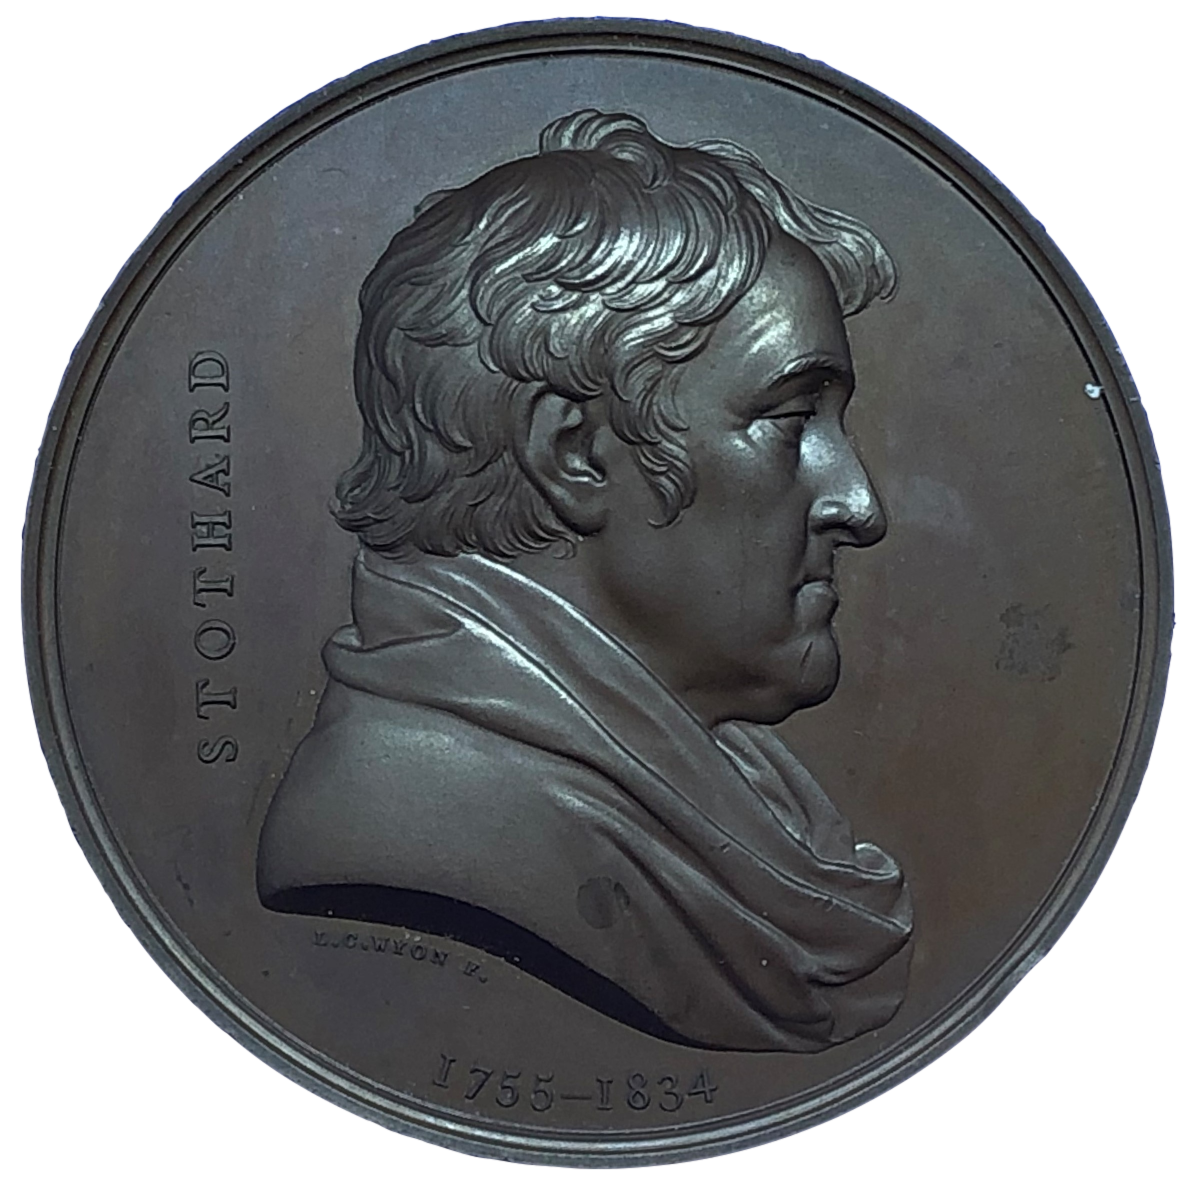 1880 Thomas Stothard, Painter Historical Medallion by L C Wyon Obverse